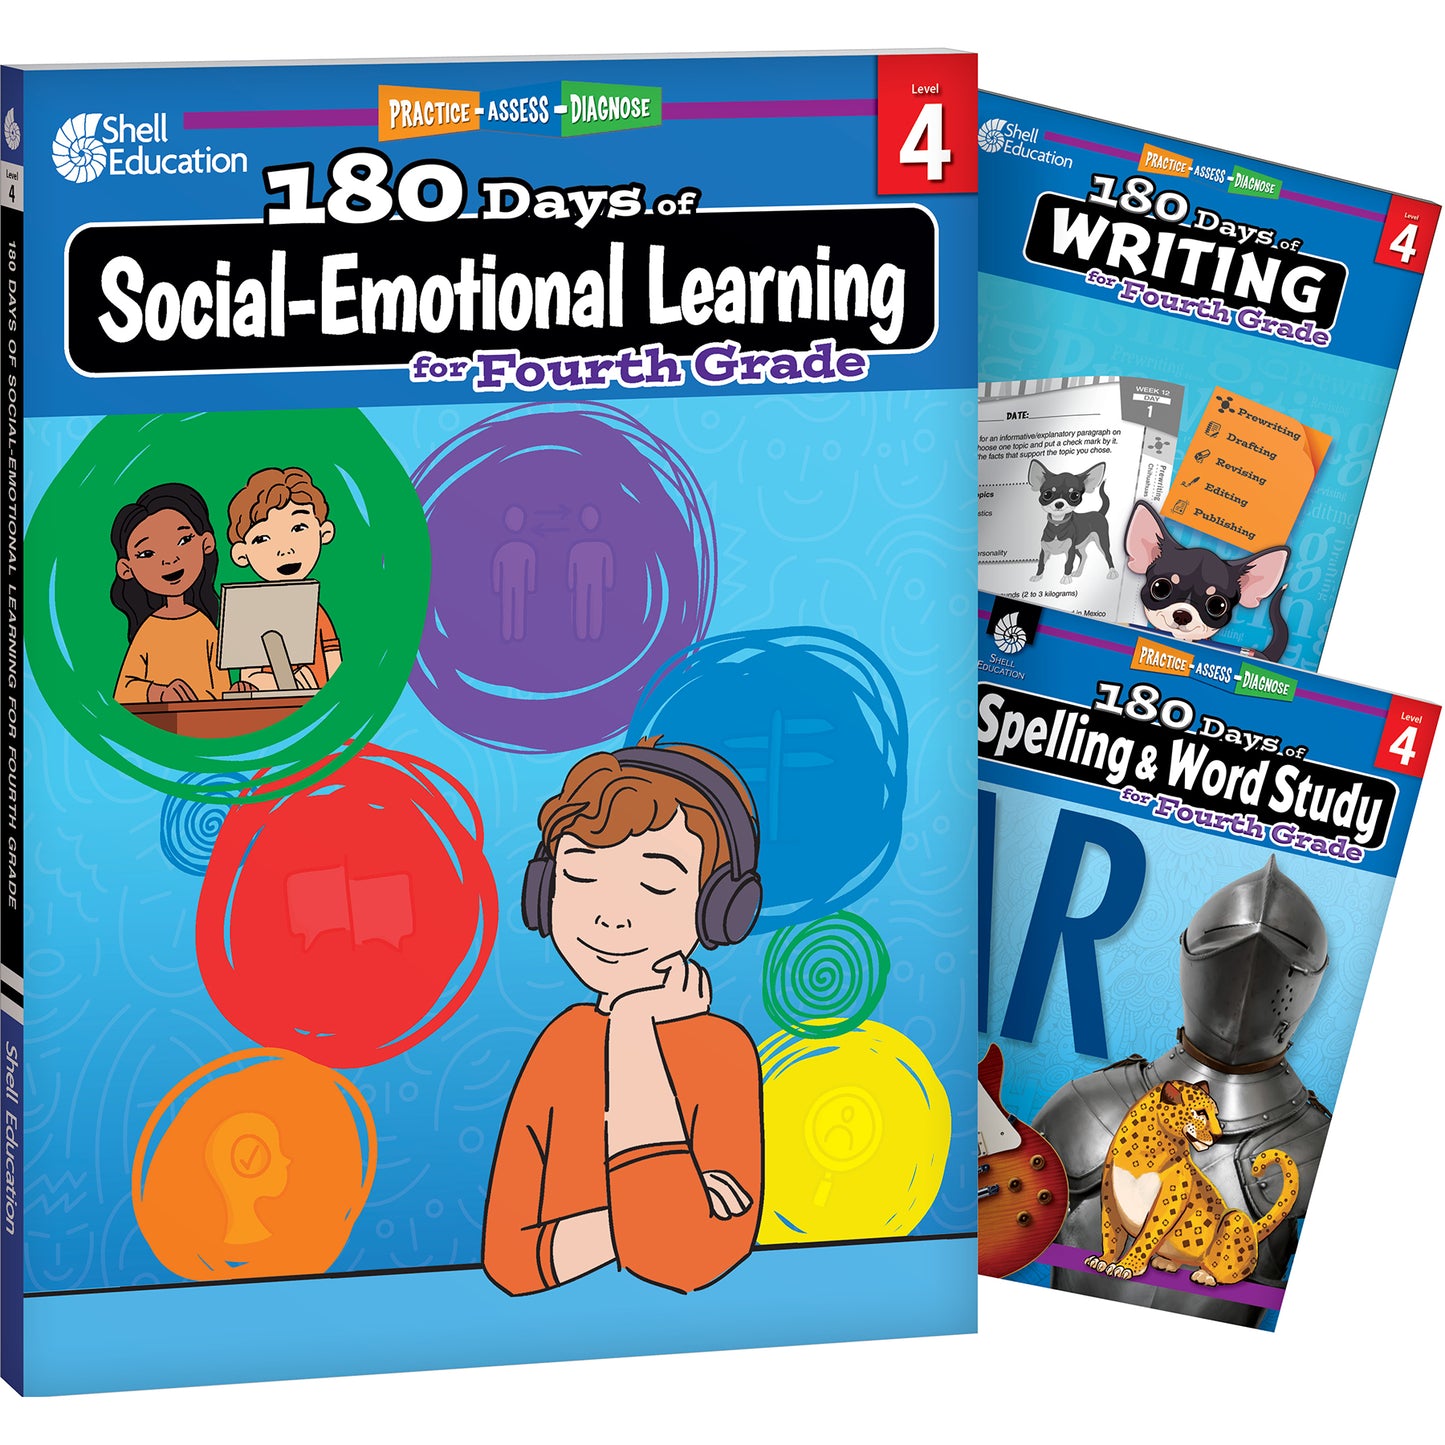 180 Days Books: Social-Emotional Learning, Writing, & Spelling for Grade 4 - Set of 3 Books